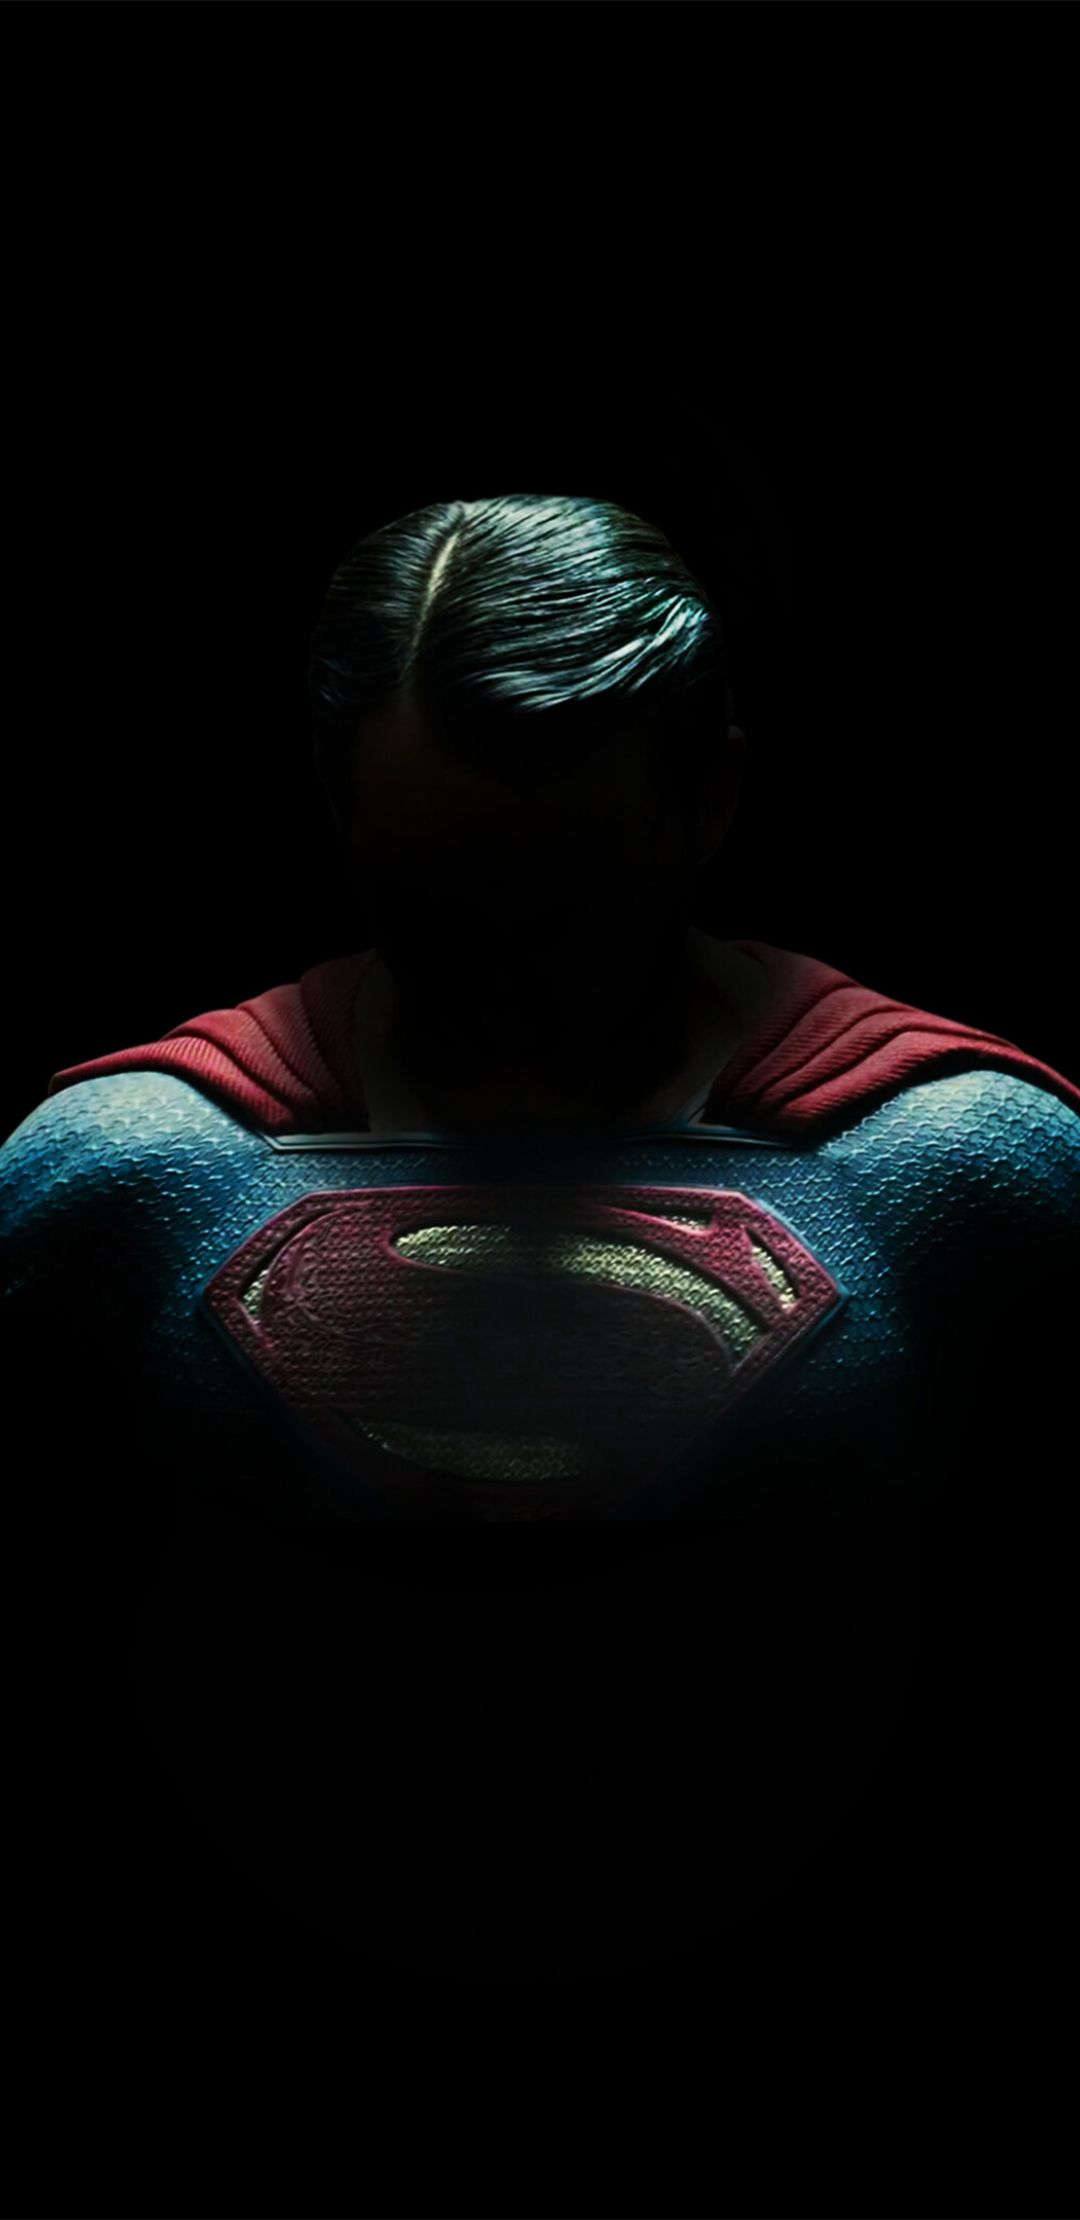 Superman Amoled 1080x2220 Resolution Wallpaper, HD Superheroes 4K Wallpaper, Image, Photo and Background